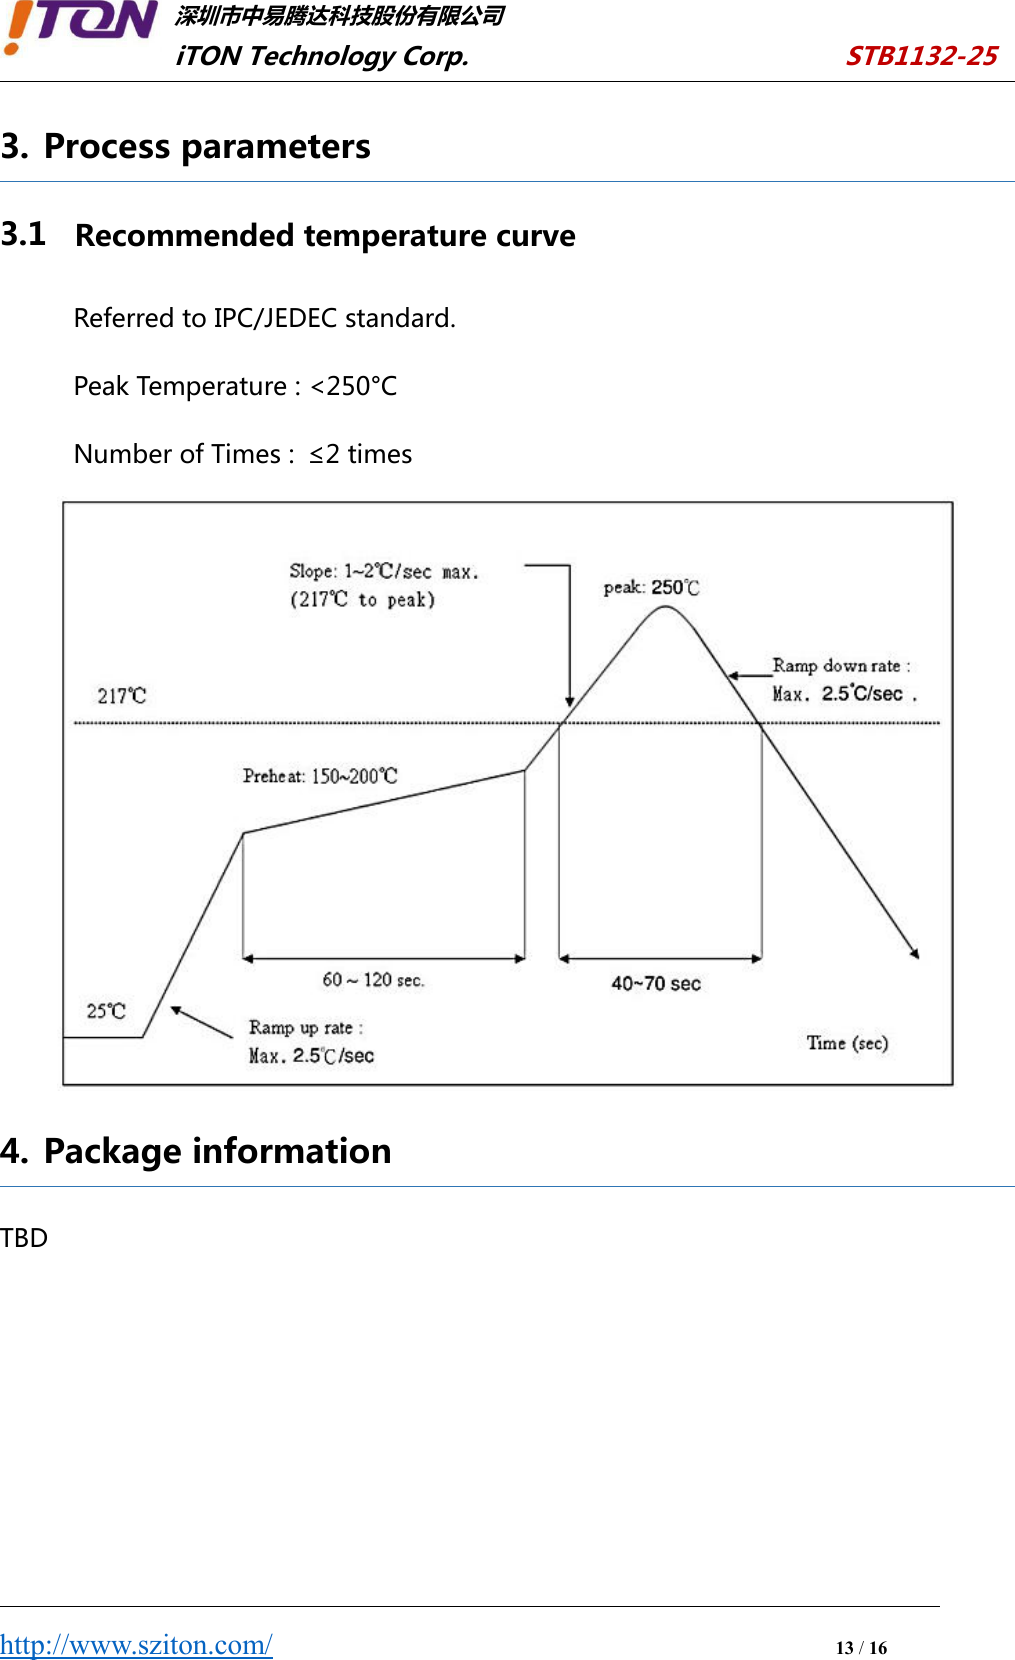 深圳市中易腾达科技股份有限公司iTON Technology Corp. STB1132-25http://www.sziton.com/13/163. Process parameters3.1 Recommended temperature curveReferred to IPC/JEDEC standard.Peak Temperature : &lt;250°CNumber of Times : ≤2 times4. Package informationTBD